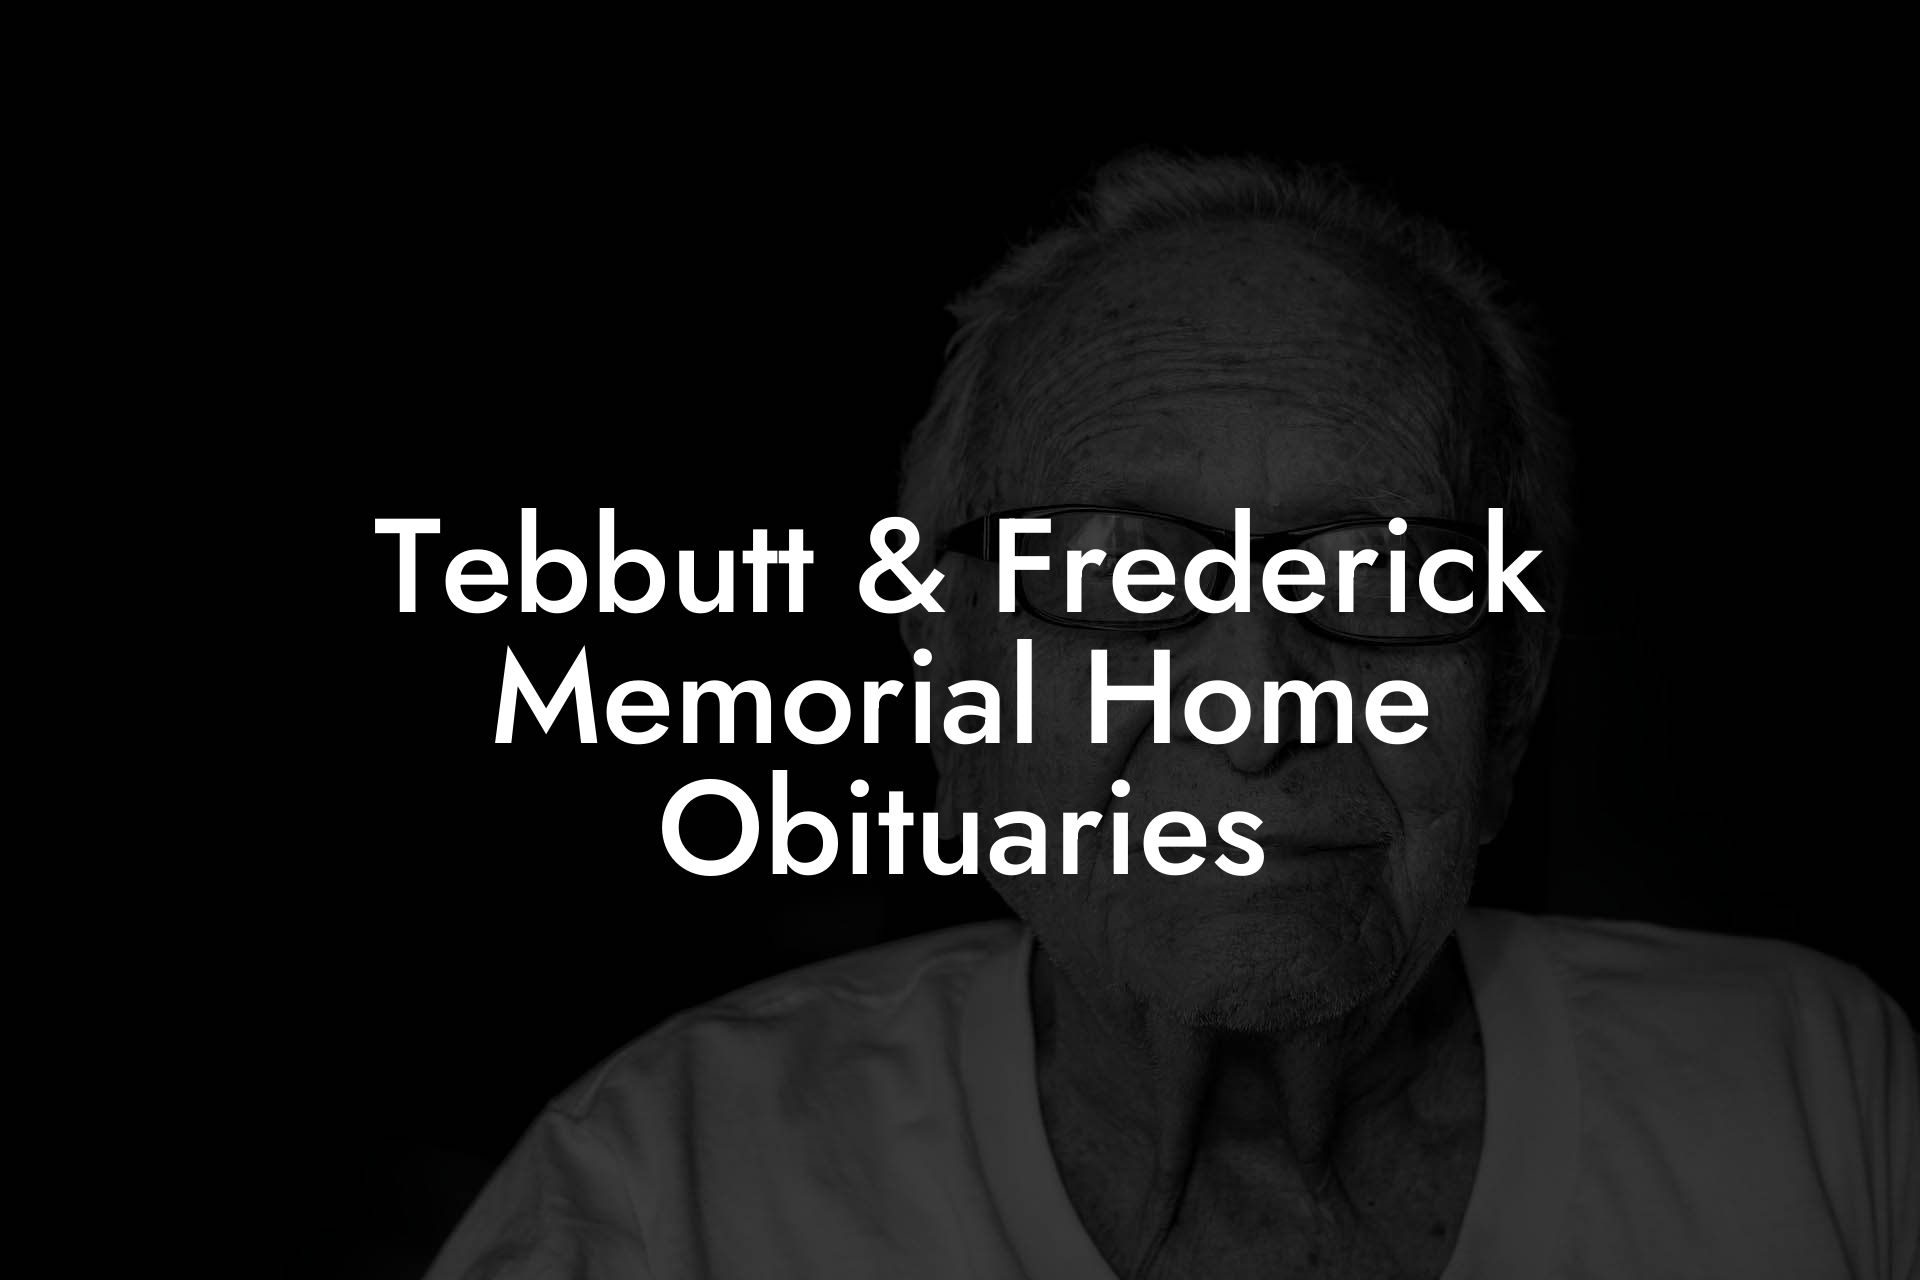 Tebbutt & Frederick Memorial Home Obituaries